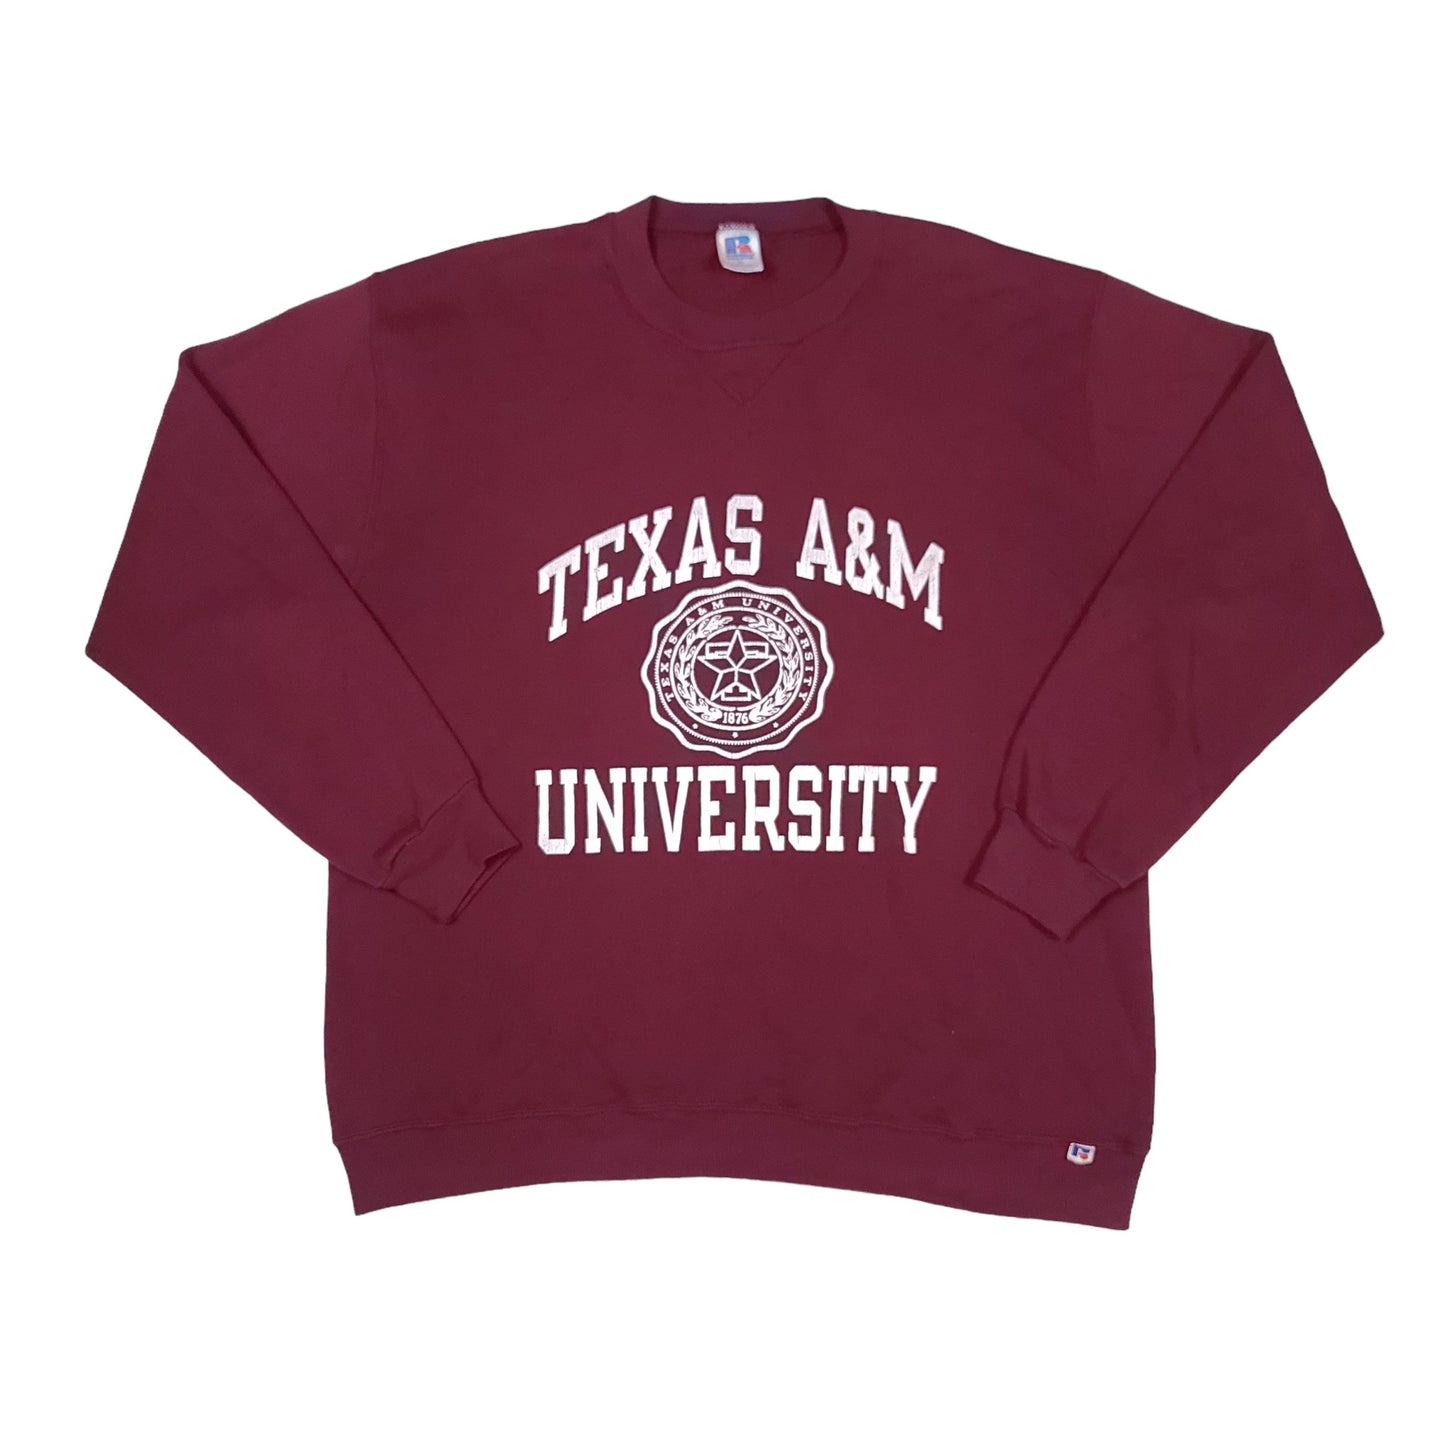 Texas A&M University Maroon Russell Athletic Sweatshirt